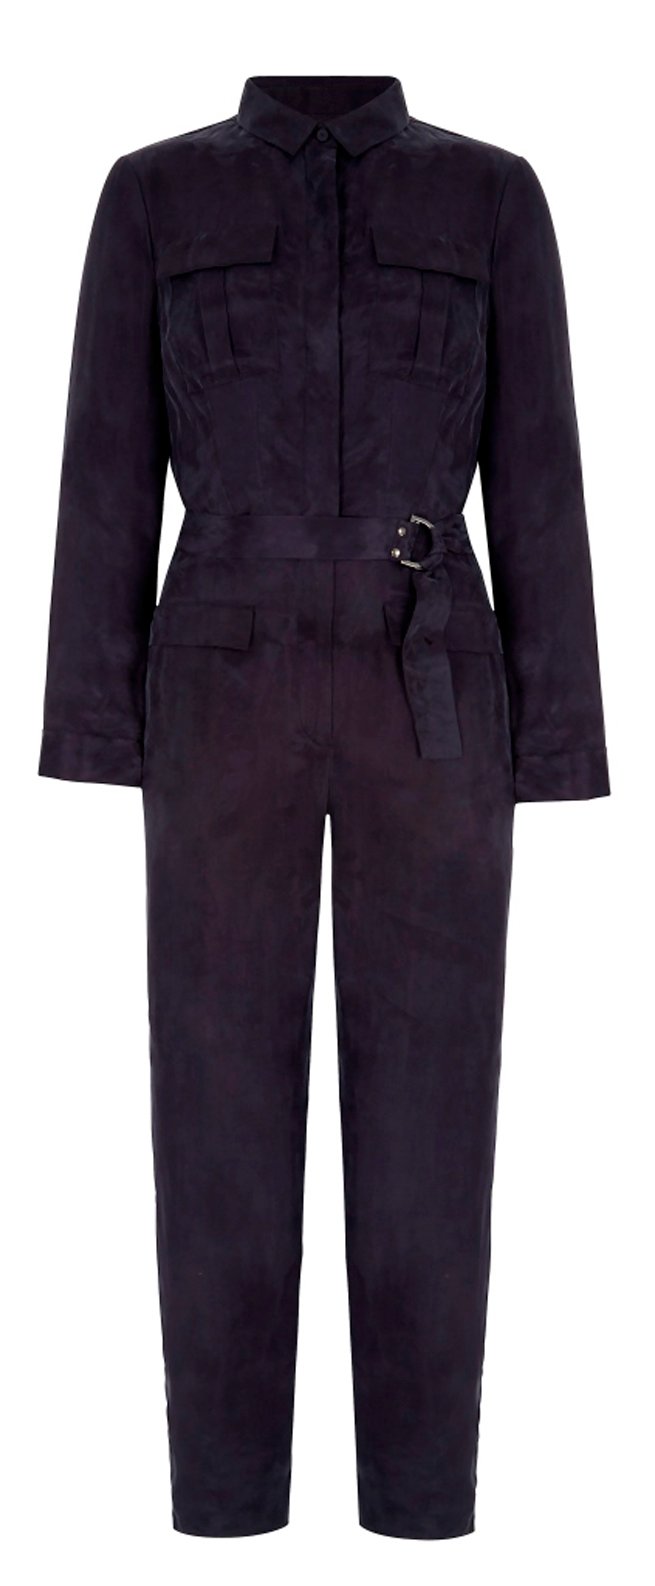 Iris & Ink_Cupro military boiler suit_THEOUTNET.COM